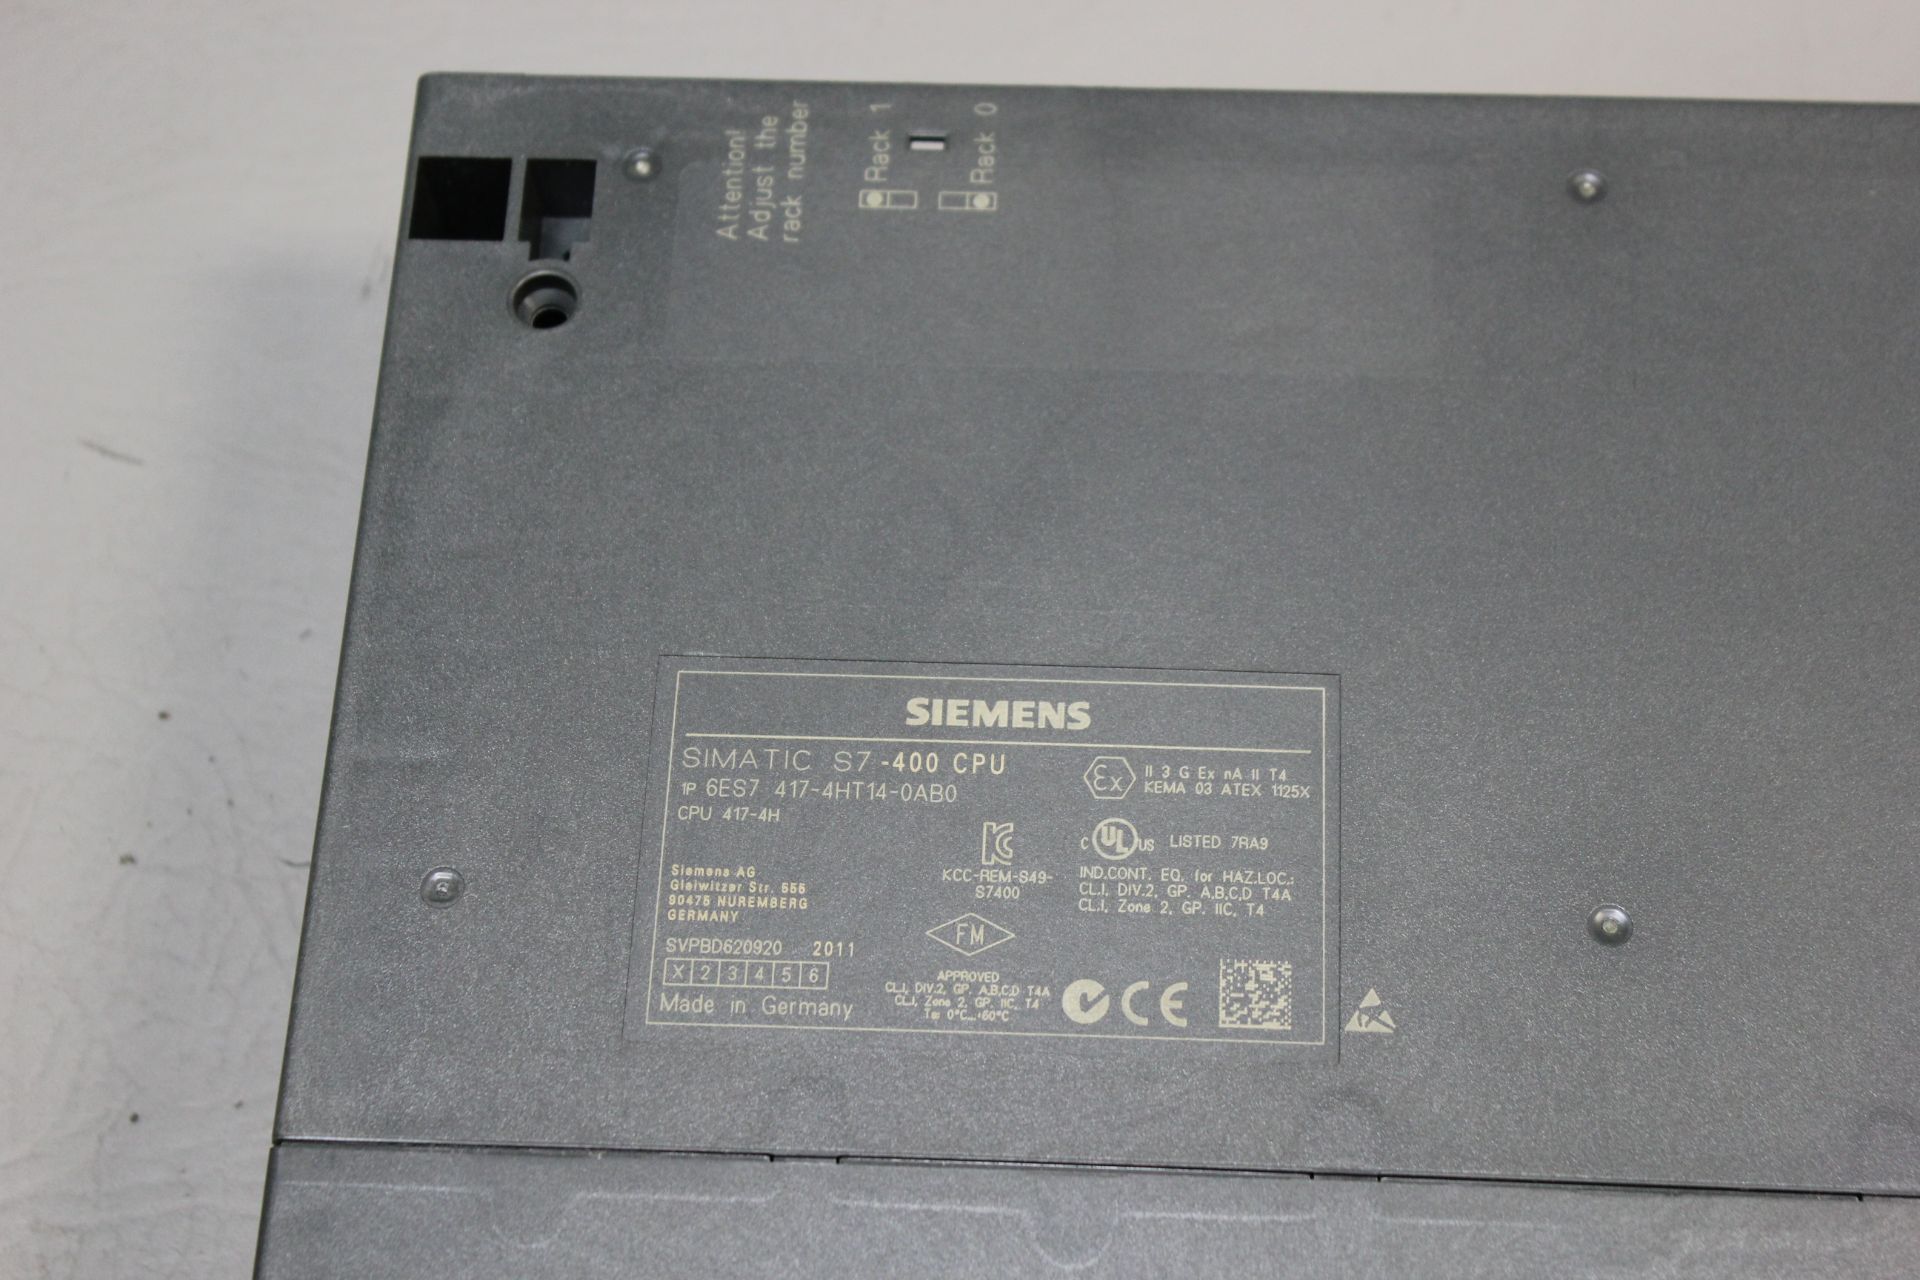 SIEMENS SIMATIC S7 PLC CPU 417-4H PROCESSOR - Image 4 of 4